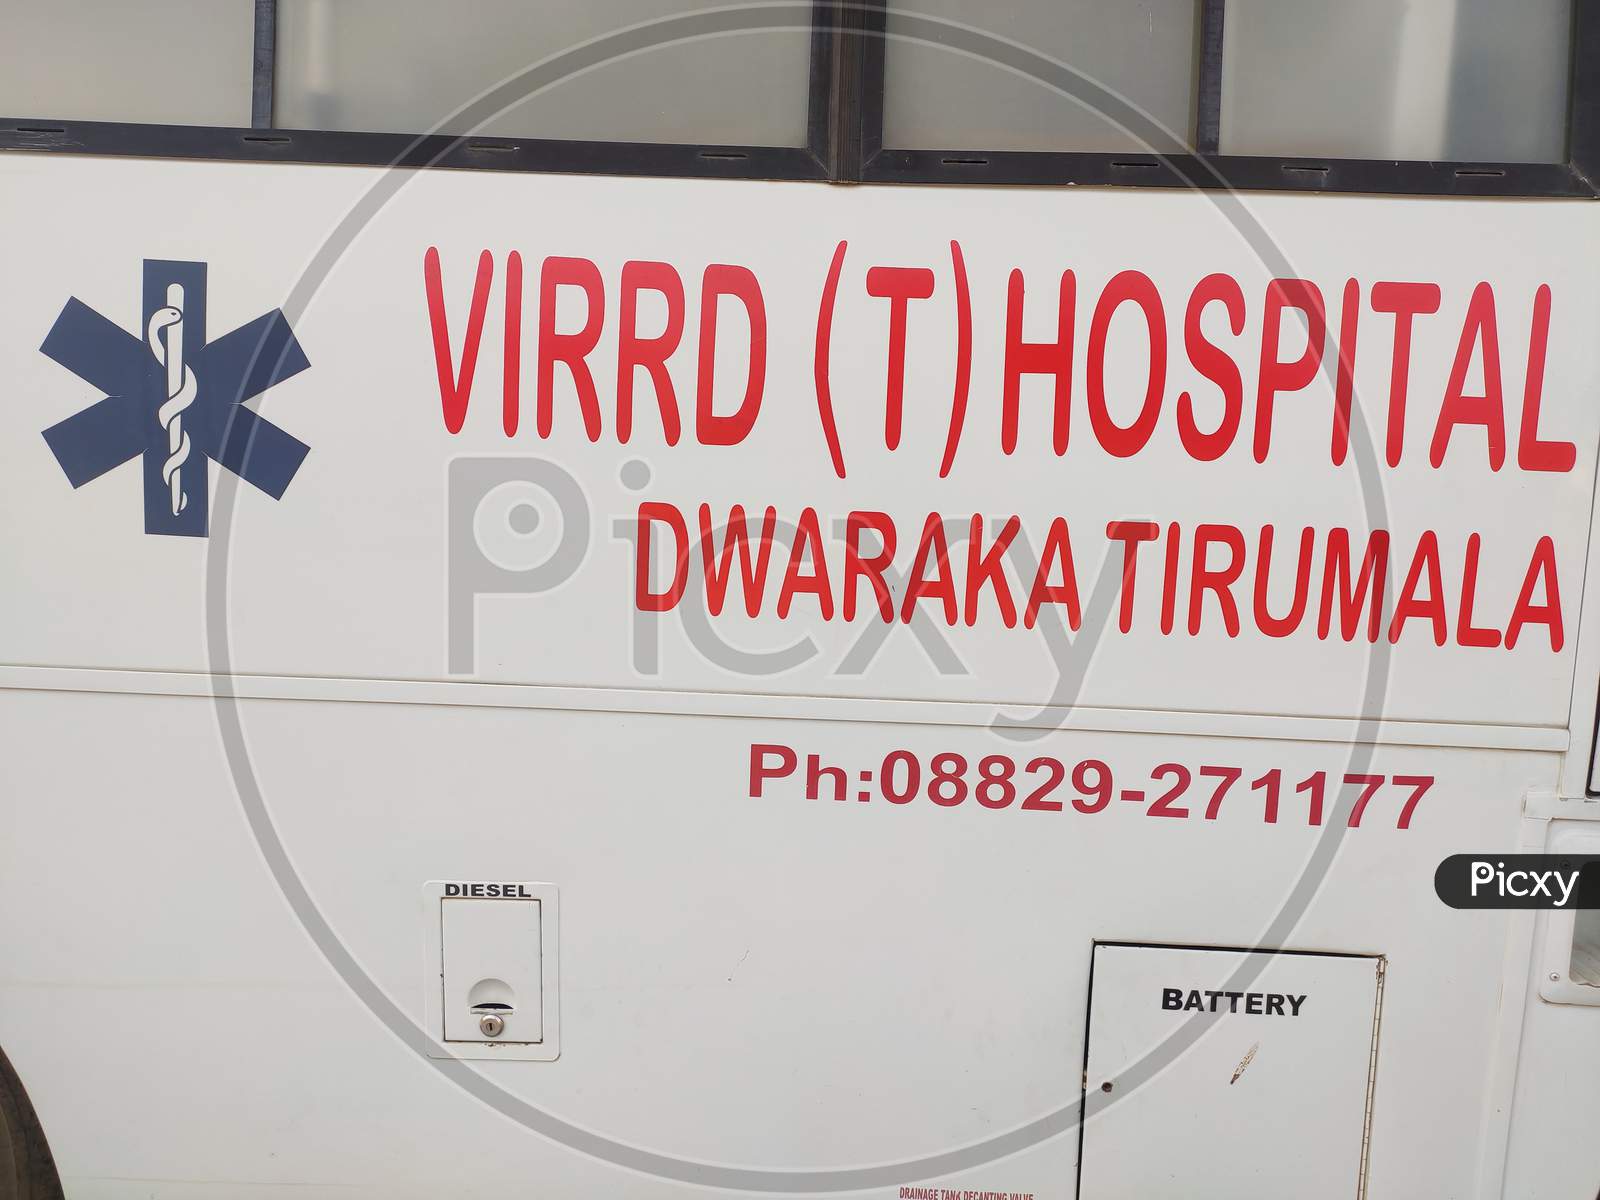 VIRRD Hospital, Dwaraka Tirumala